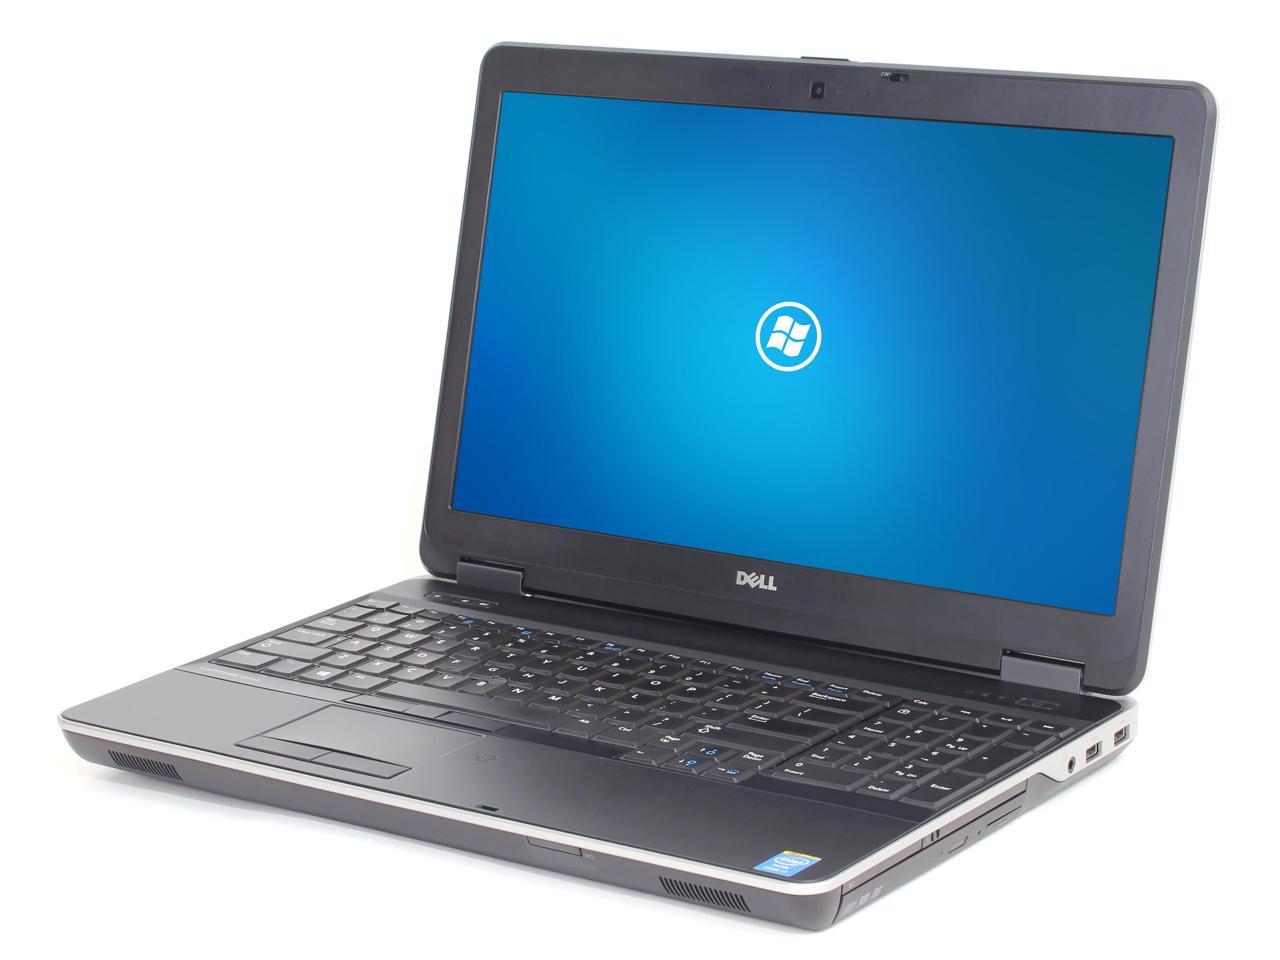 Dell Latitude E6540 Laptop, Quad Core i7 4800MQ 2.7Ghz, 8GB DDR3, 500GB Hard Drive, 1080P 15.6" FHD LCD, AMD Radeon HD 8790M 2GB GDDR5, HDMI, Windows 10 Pro - Grade B